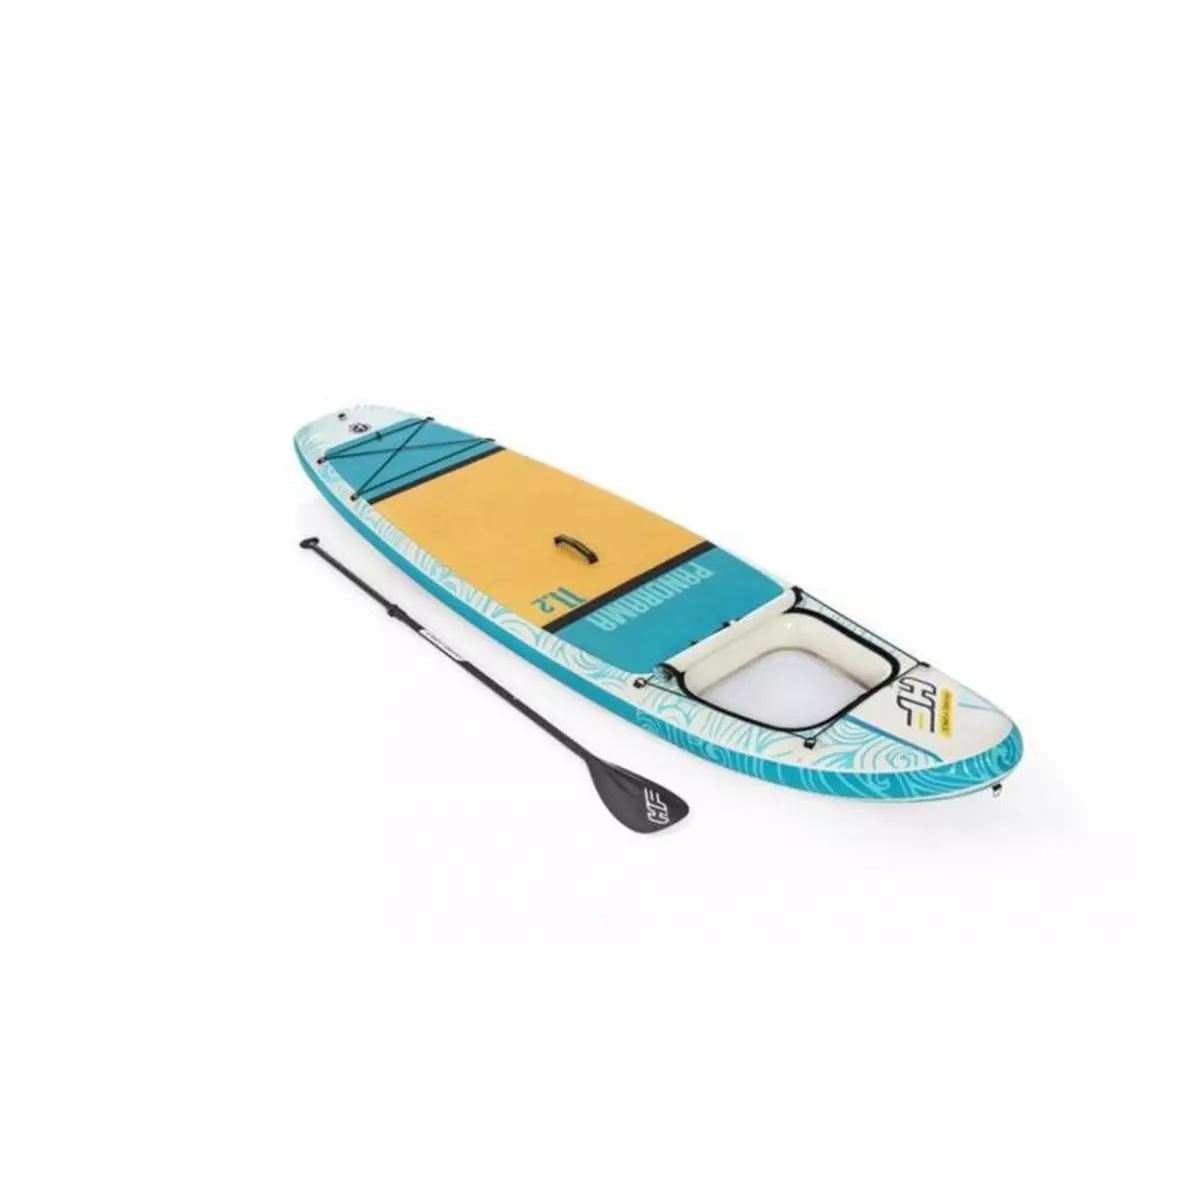 BESTWAY BESTWAY Paddle gonflable Panorama Hydro-force™, 340 x 89 x 15 cm, 150 kg max, fenetre transparent, pompe, leash